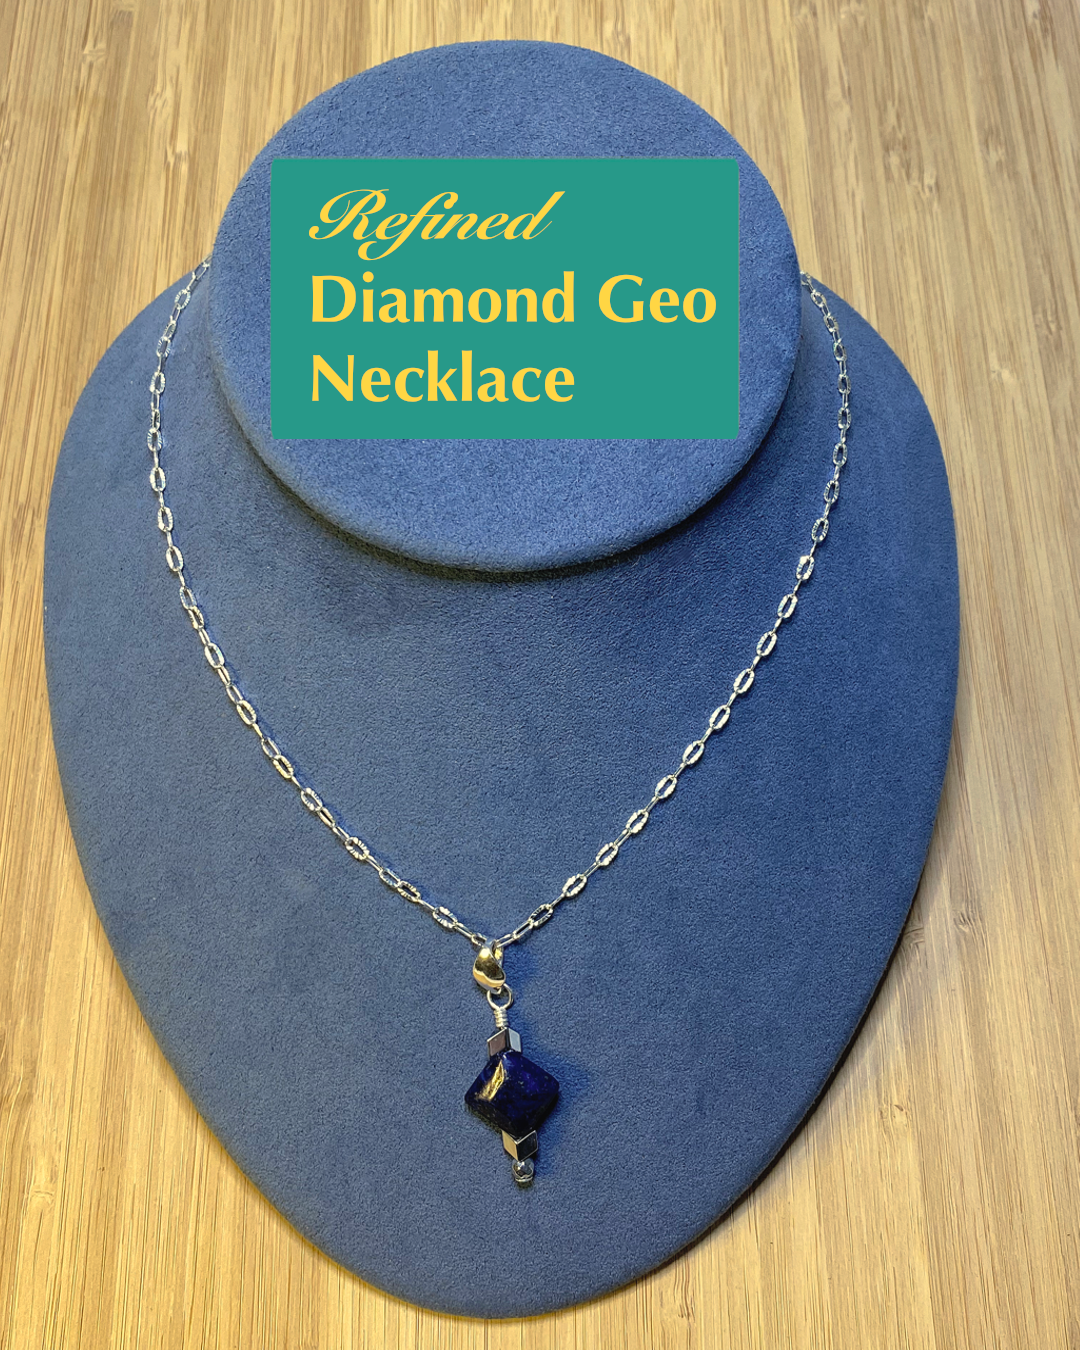 Refined Diamond Geo Necklace